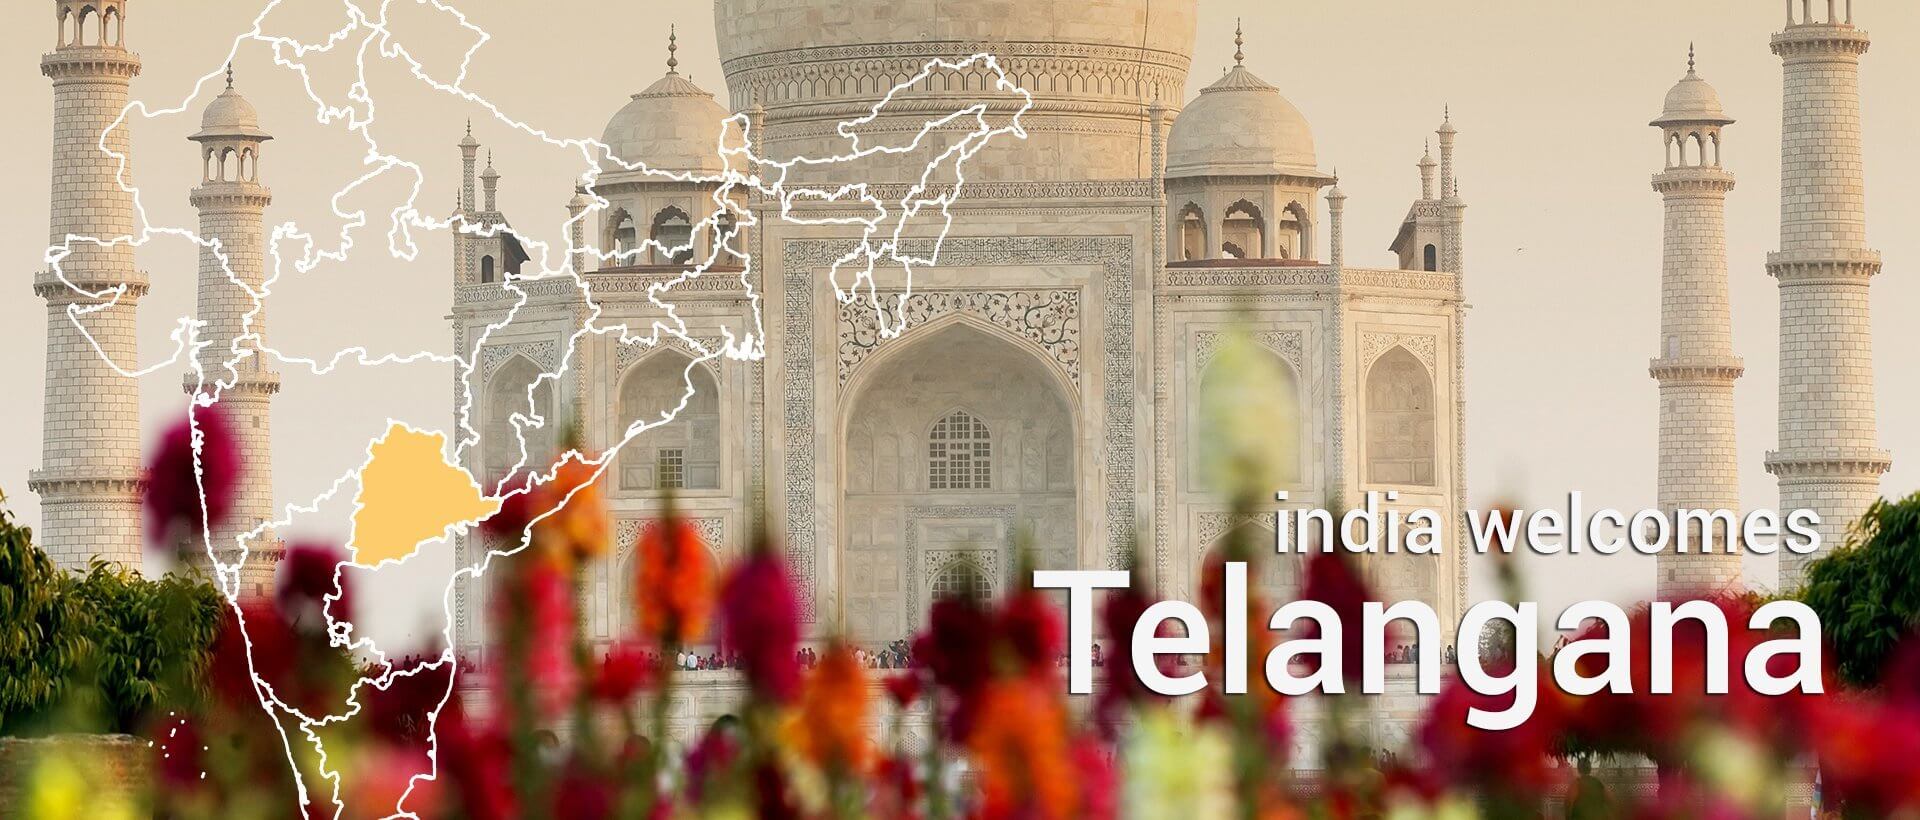 Telangana new state in India